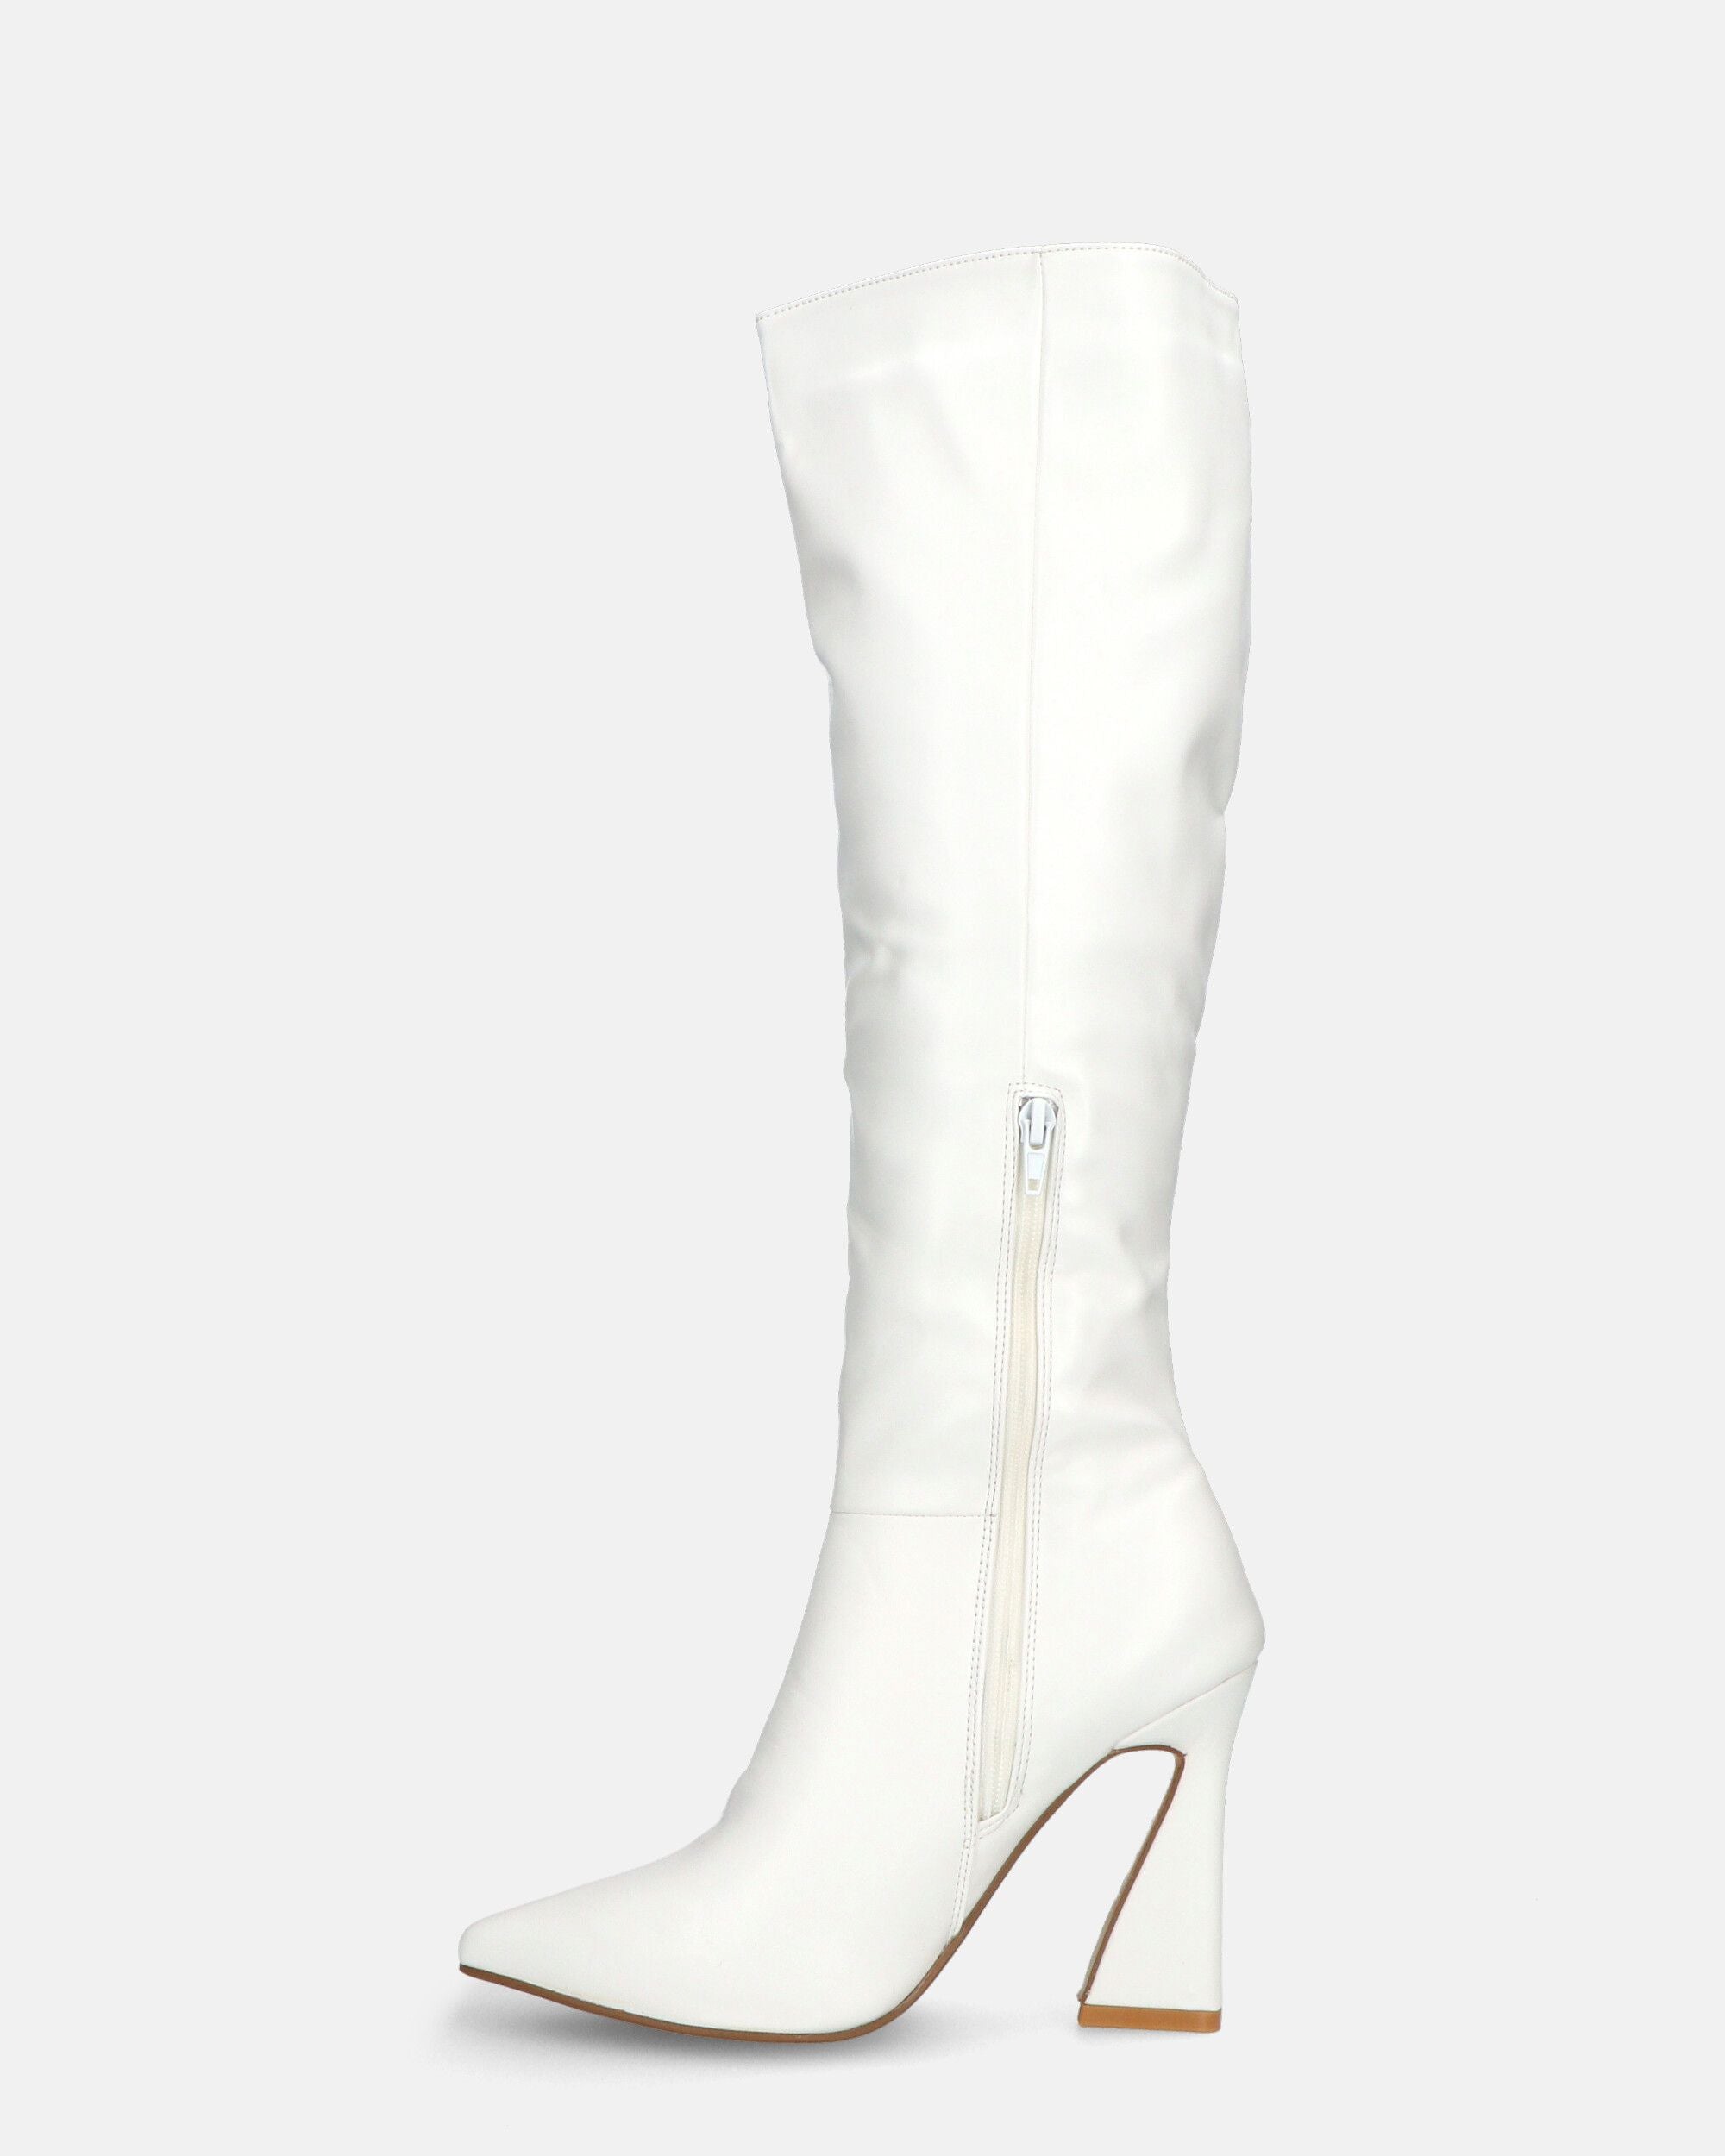 KELLY - bota alta blanca con cremallera lateral